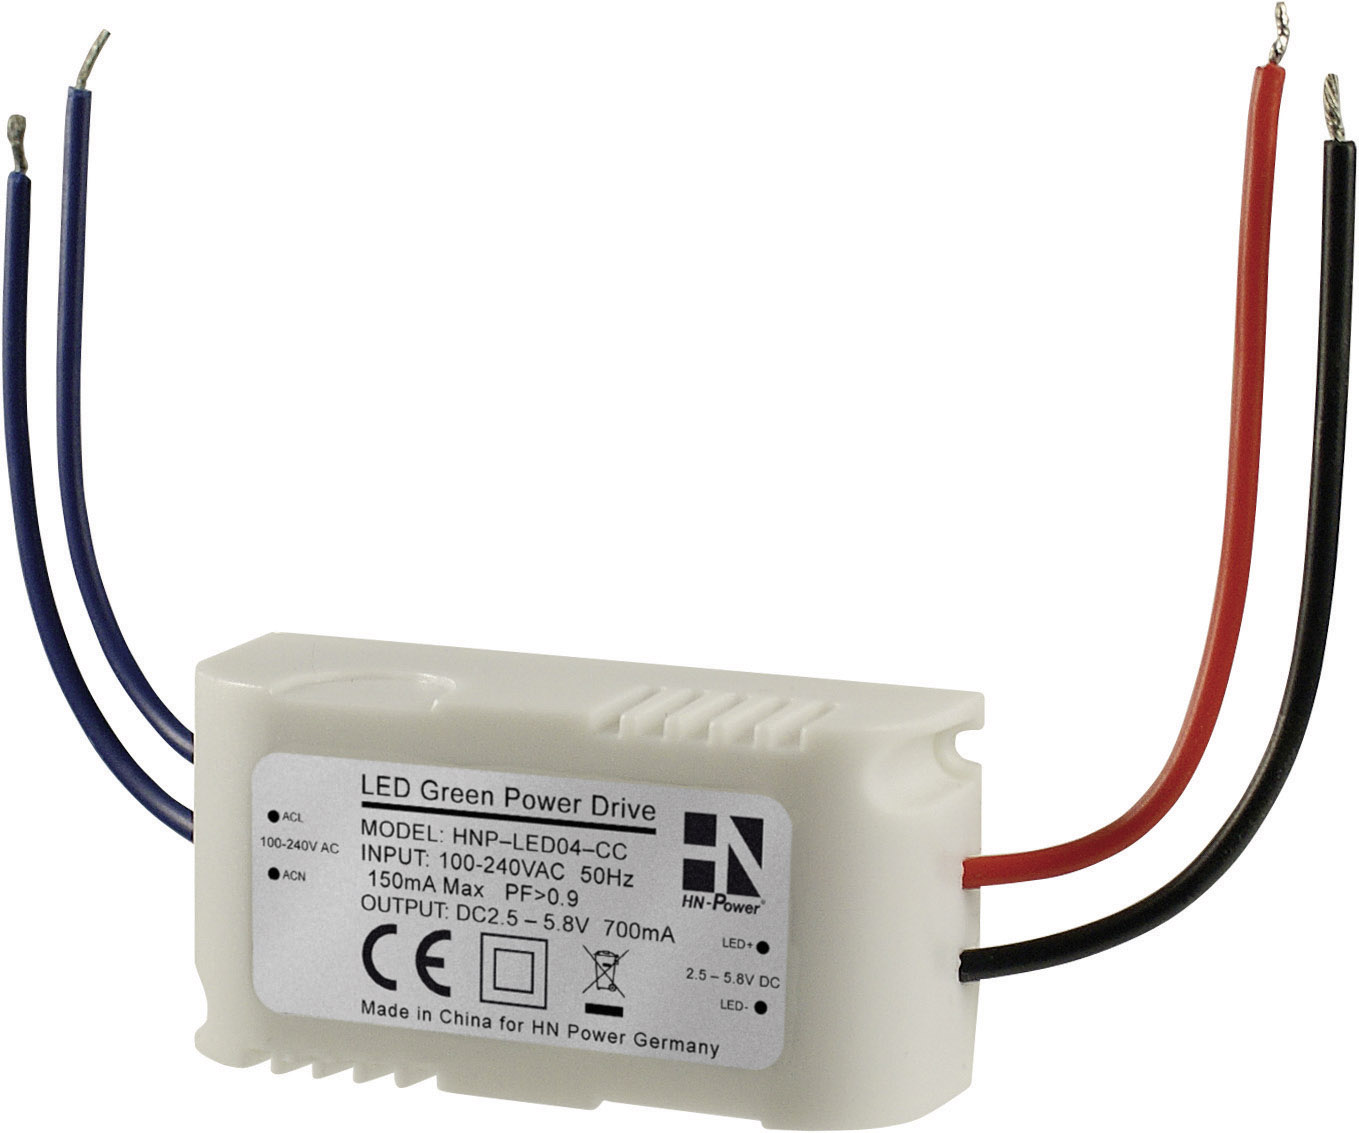 HN Power HNP-LED04-CC AC/DC-Printnetzteil 5.8 V/DC 700mA 4W